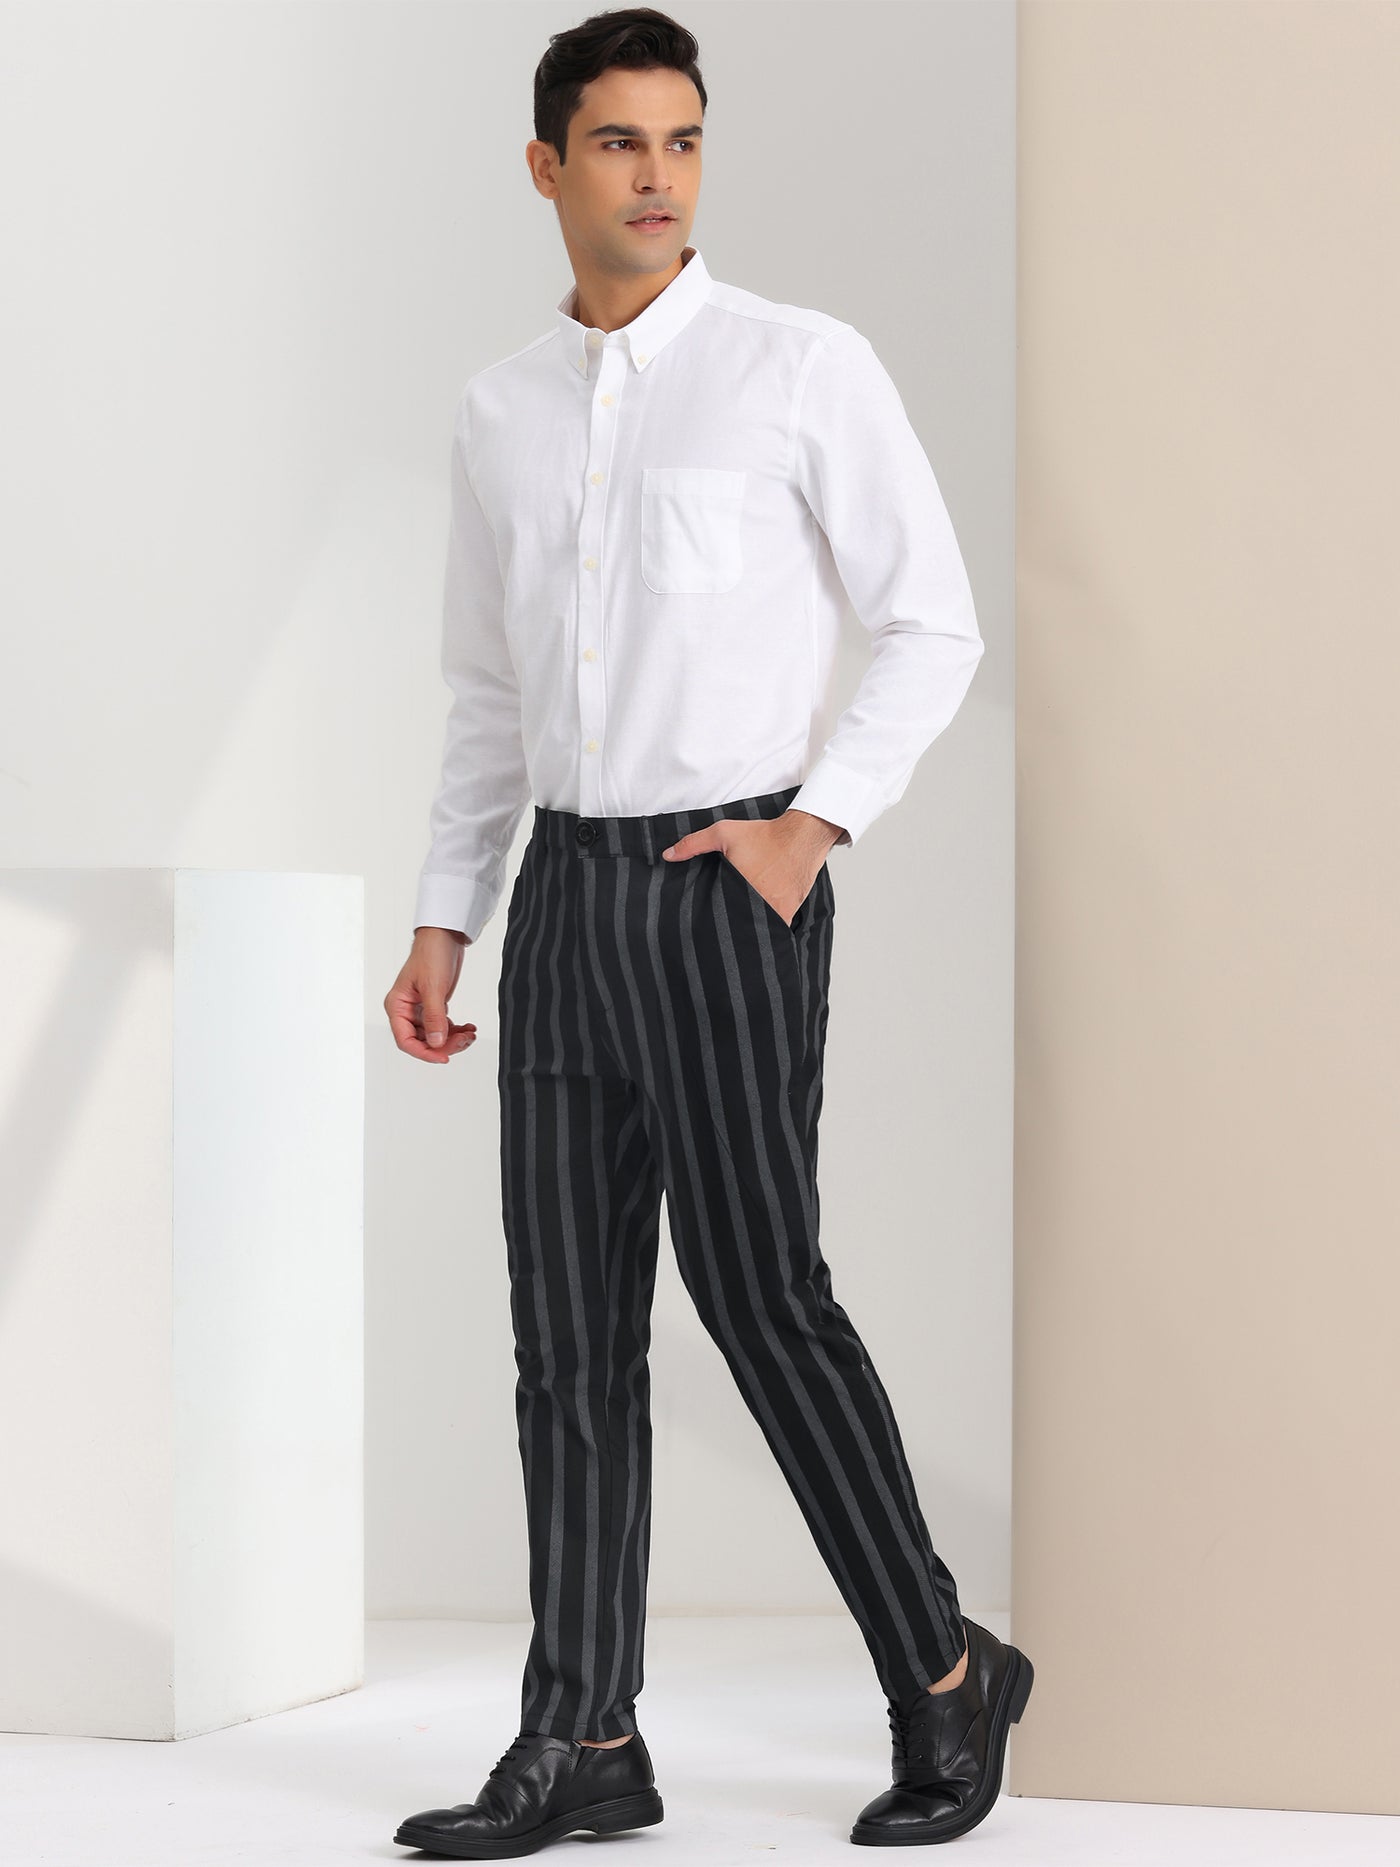 Bublédon Men's Striped Dress Pants Classic Fit Flat Front Pencil Prom Trousers